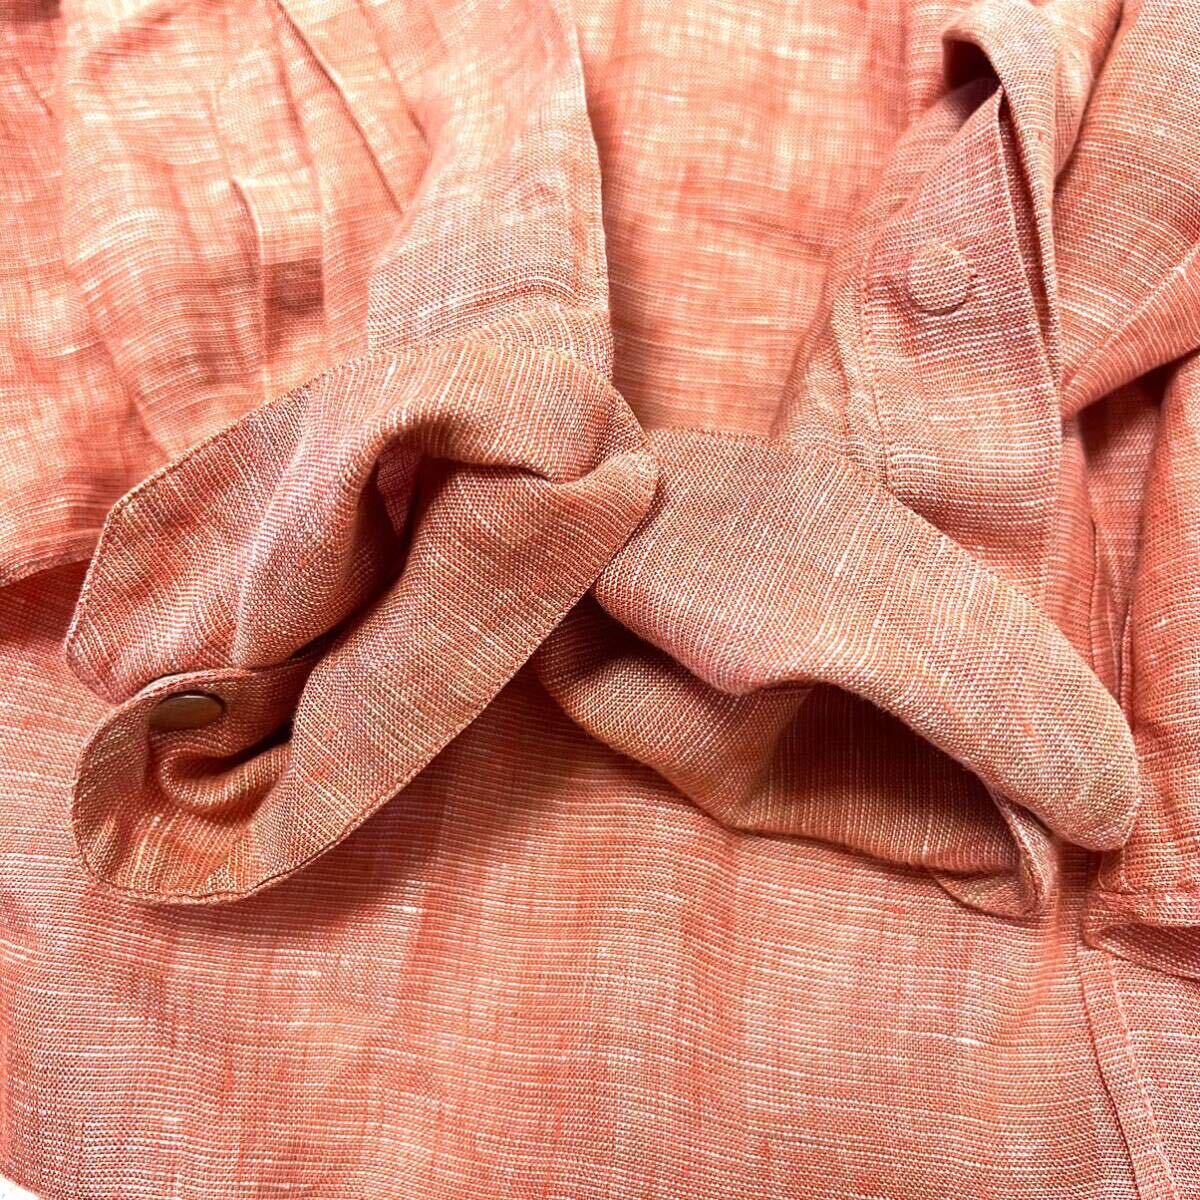 1 jpy beautiful goods Armani ko let's .-niARMANI COLLEZIONIlinen shirt Rider's double Zip jacket size L~XL orange pink 